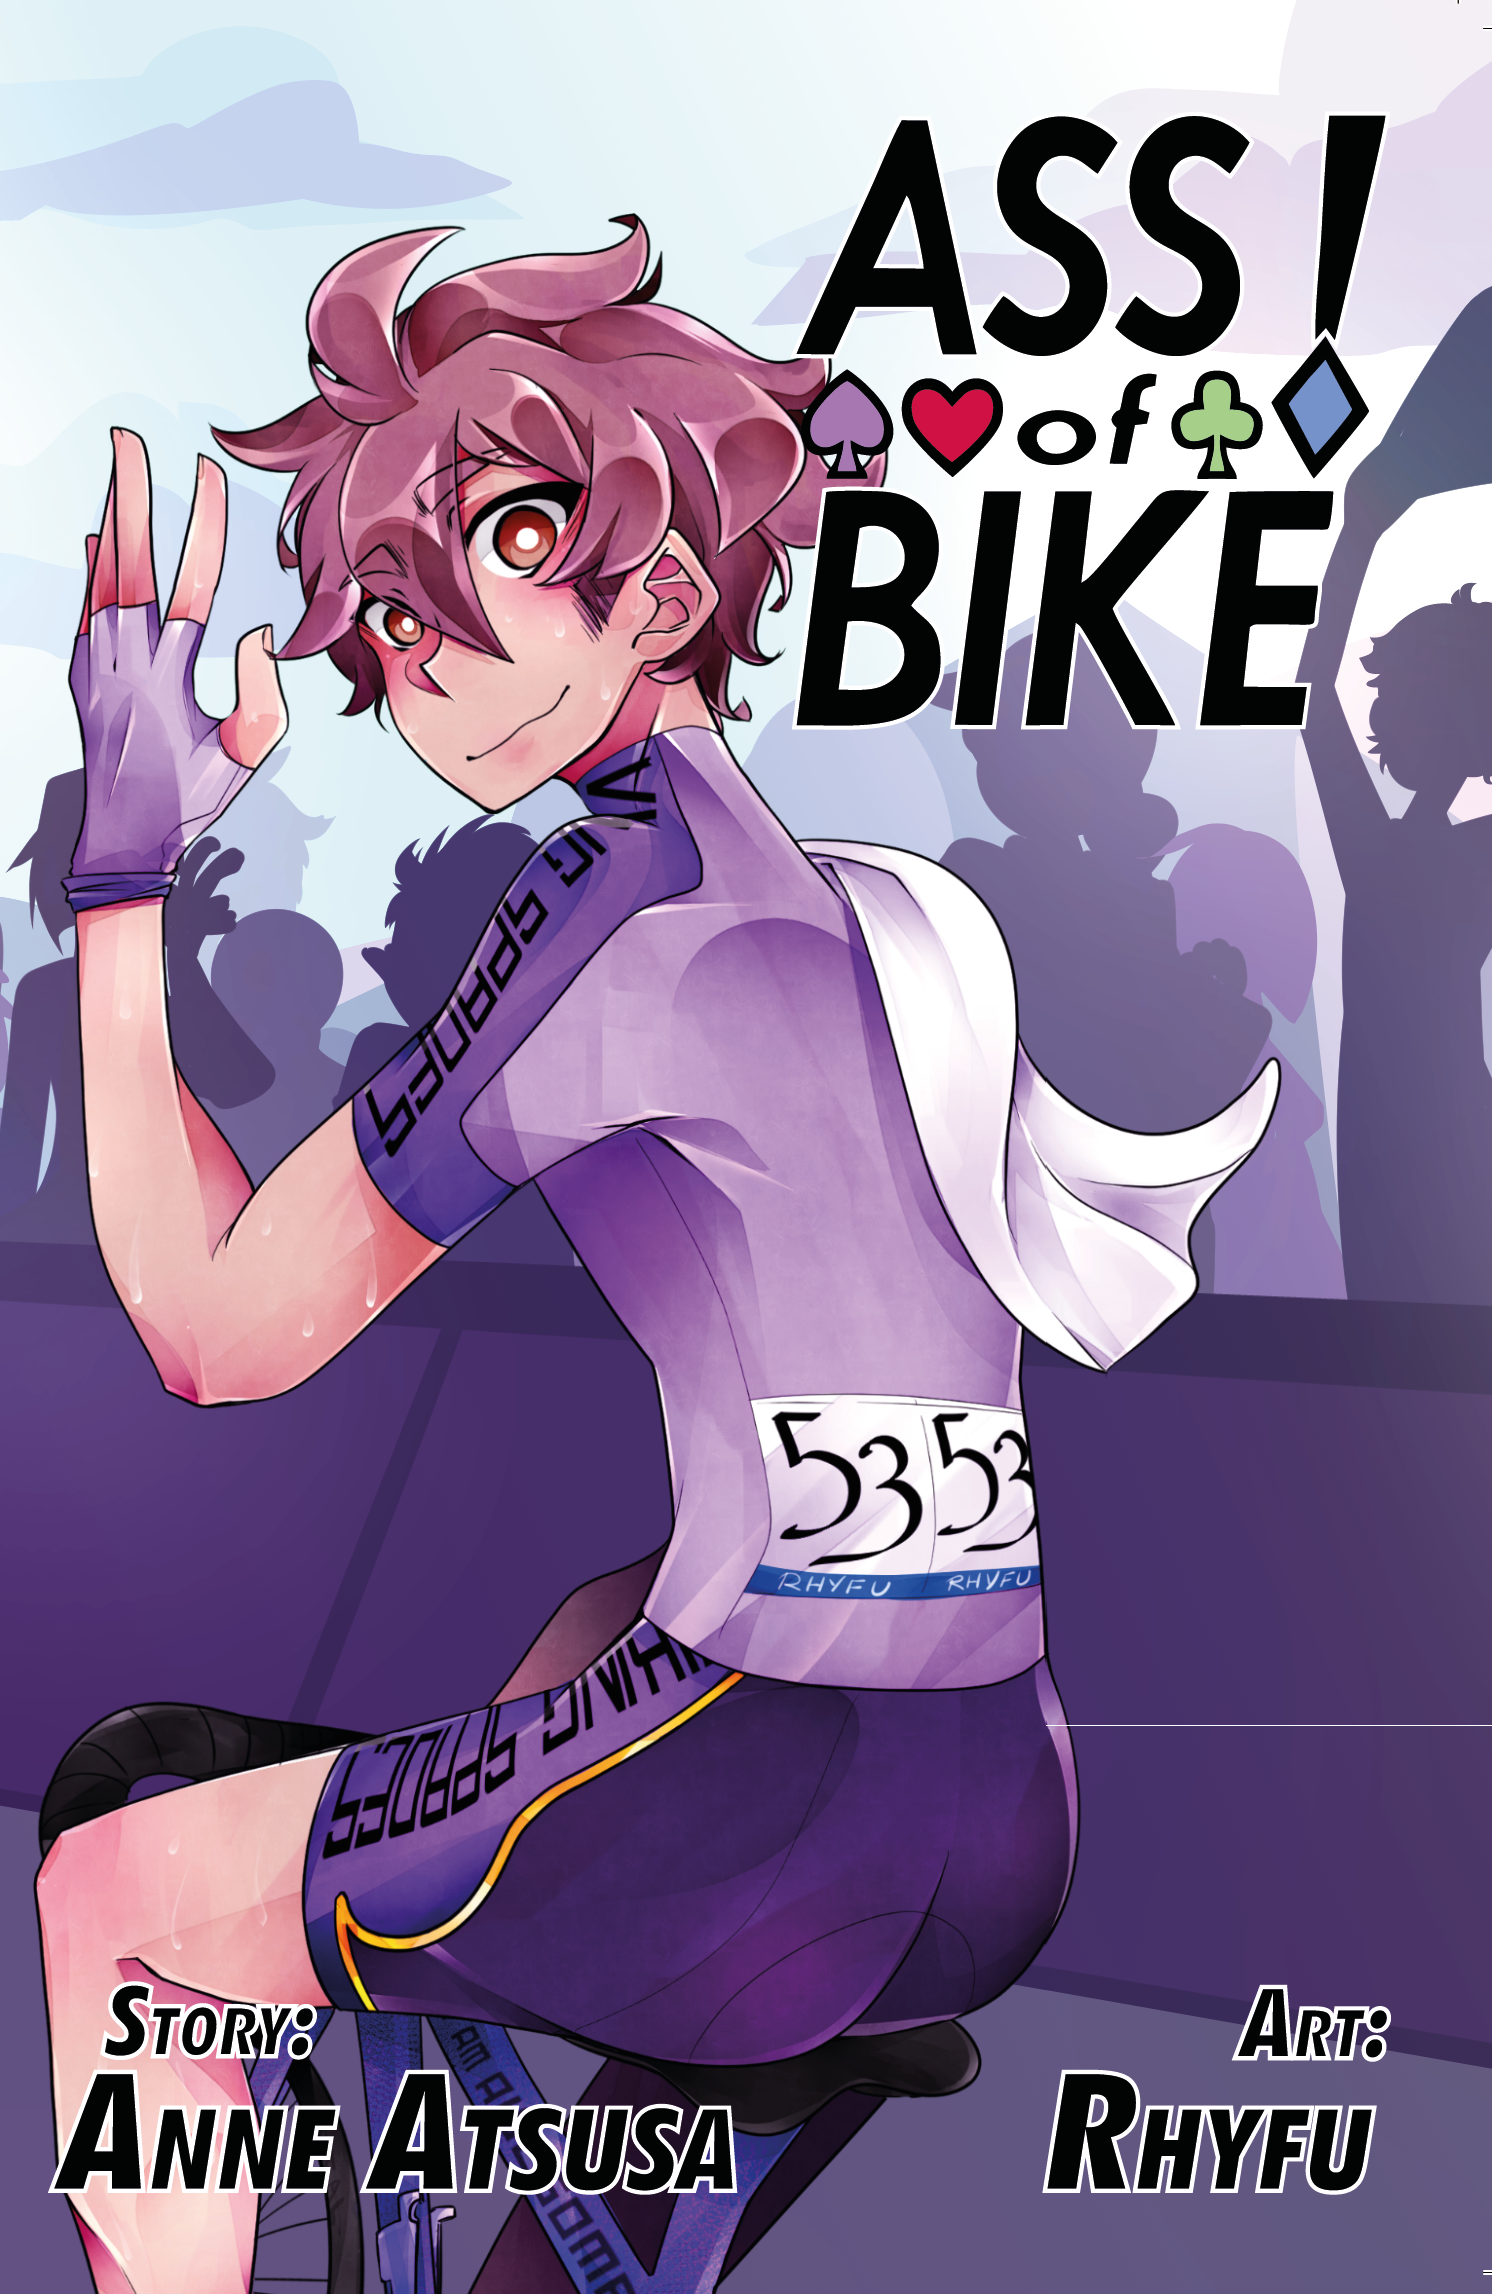 Cover des 1. Bands von Ass! of Bike